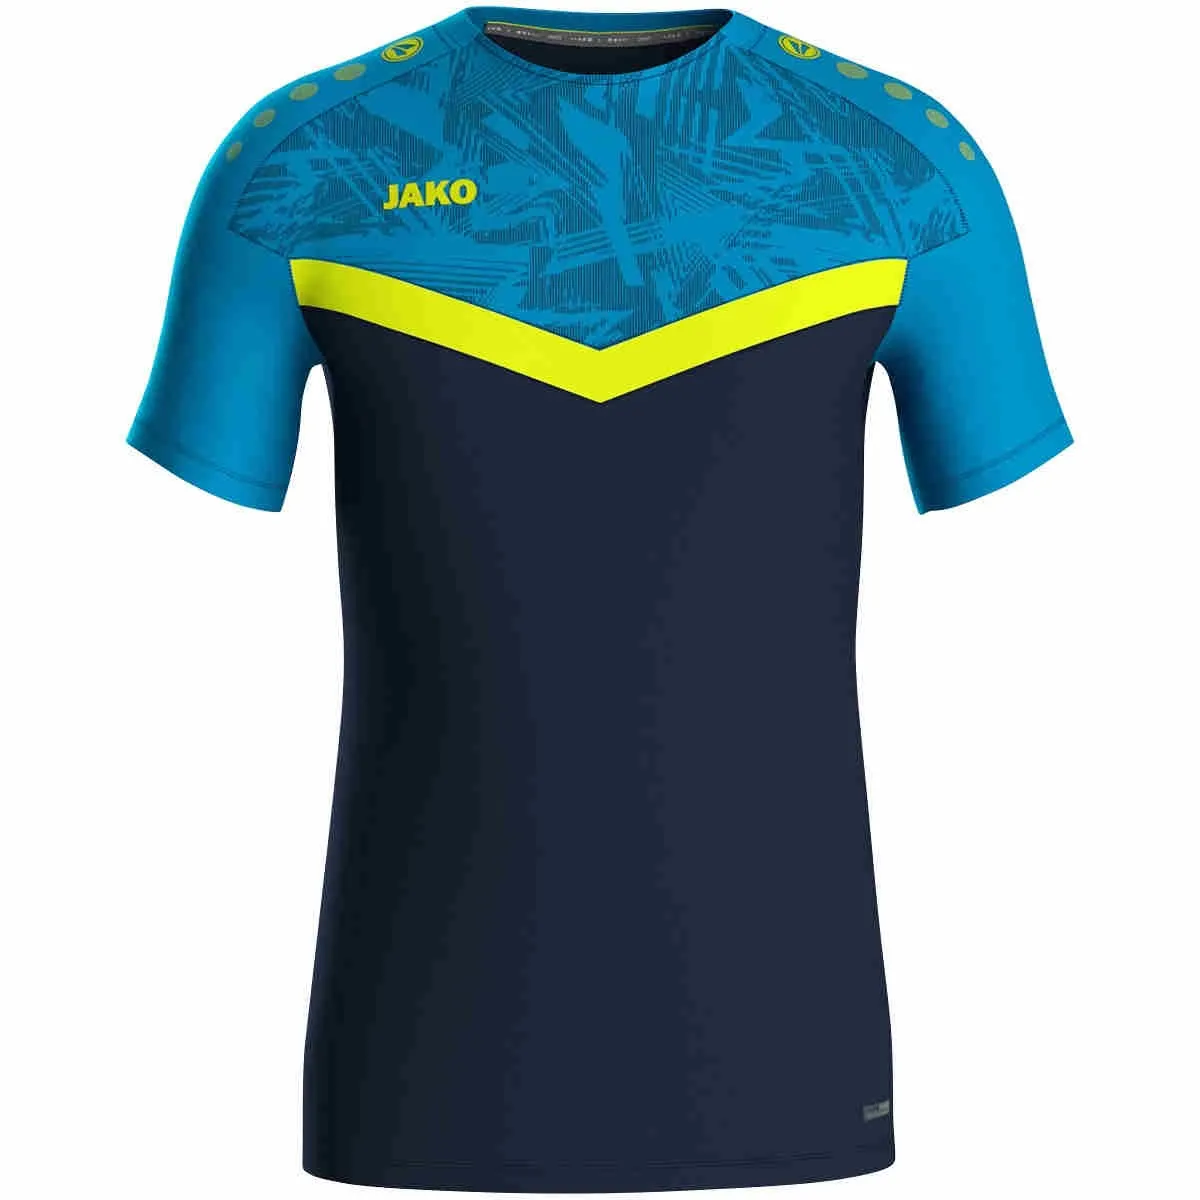 JAKO T-Shirt Iconic, marine JAKO blau neongelb 13-JA6124914